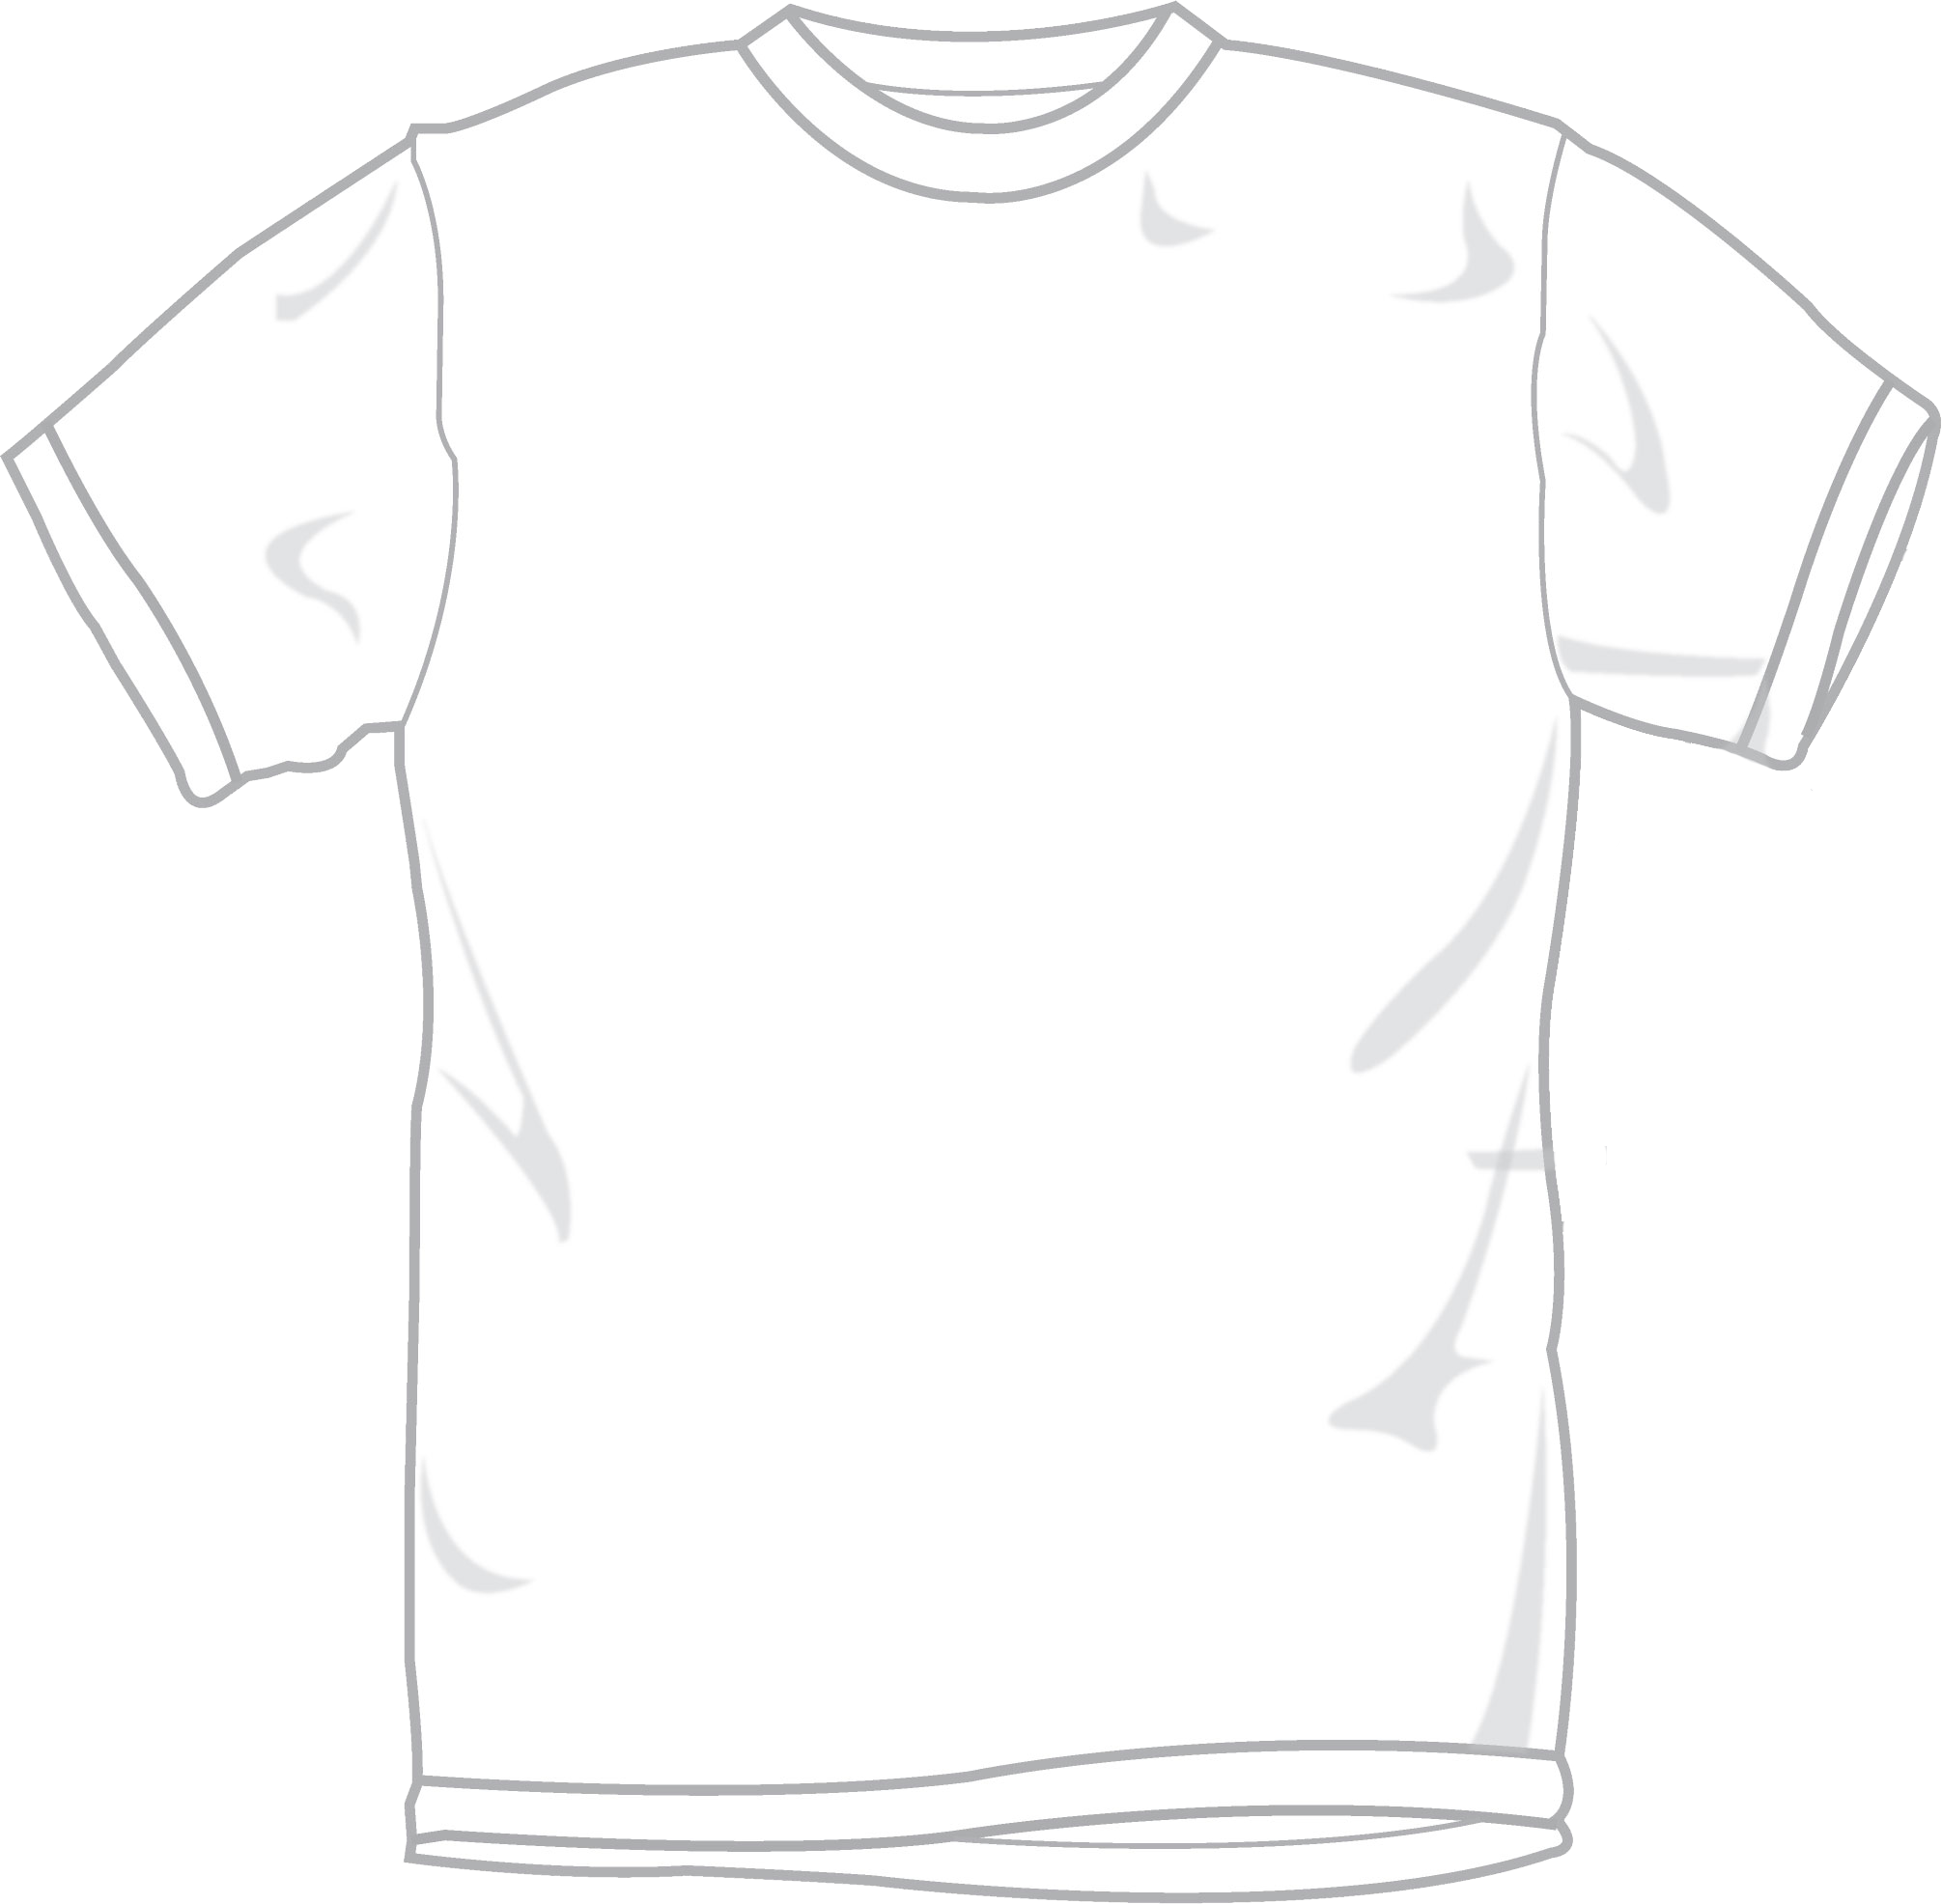 White T Shirt Template   Clipart Best